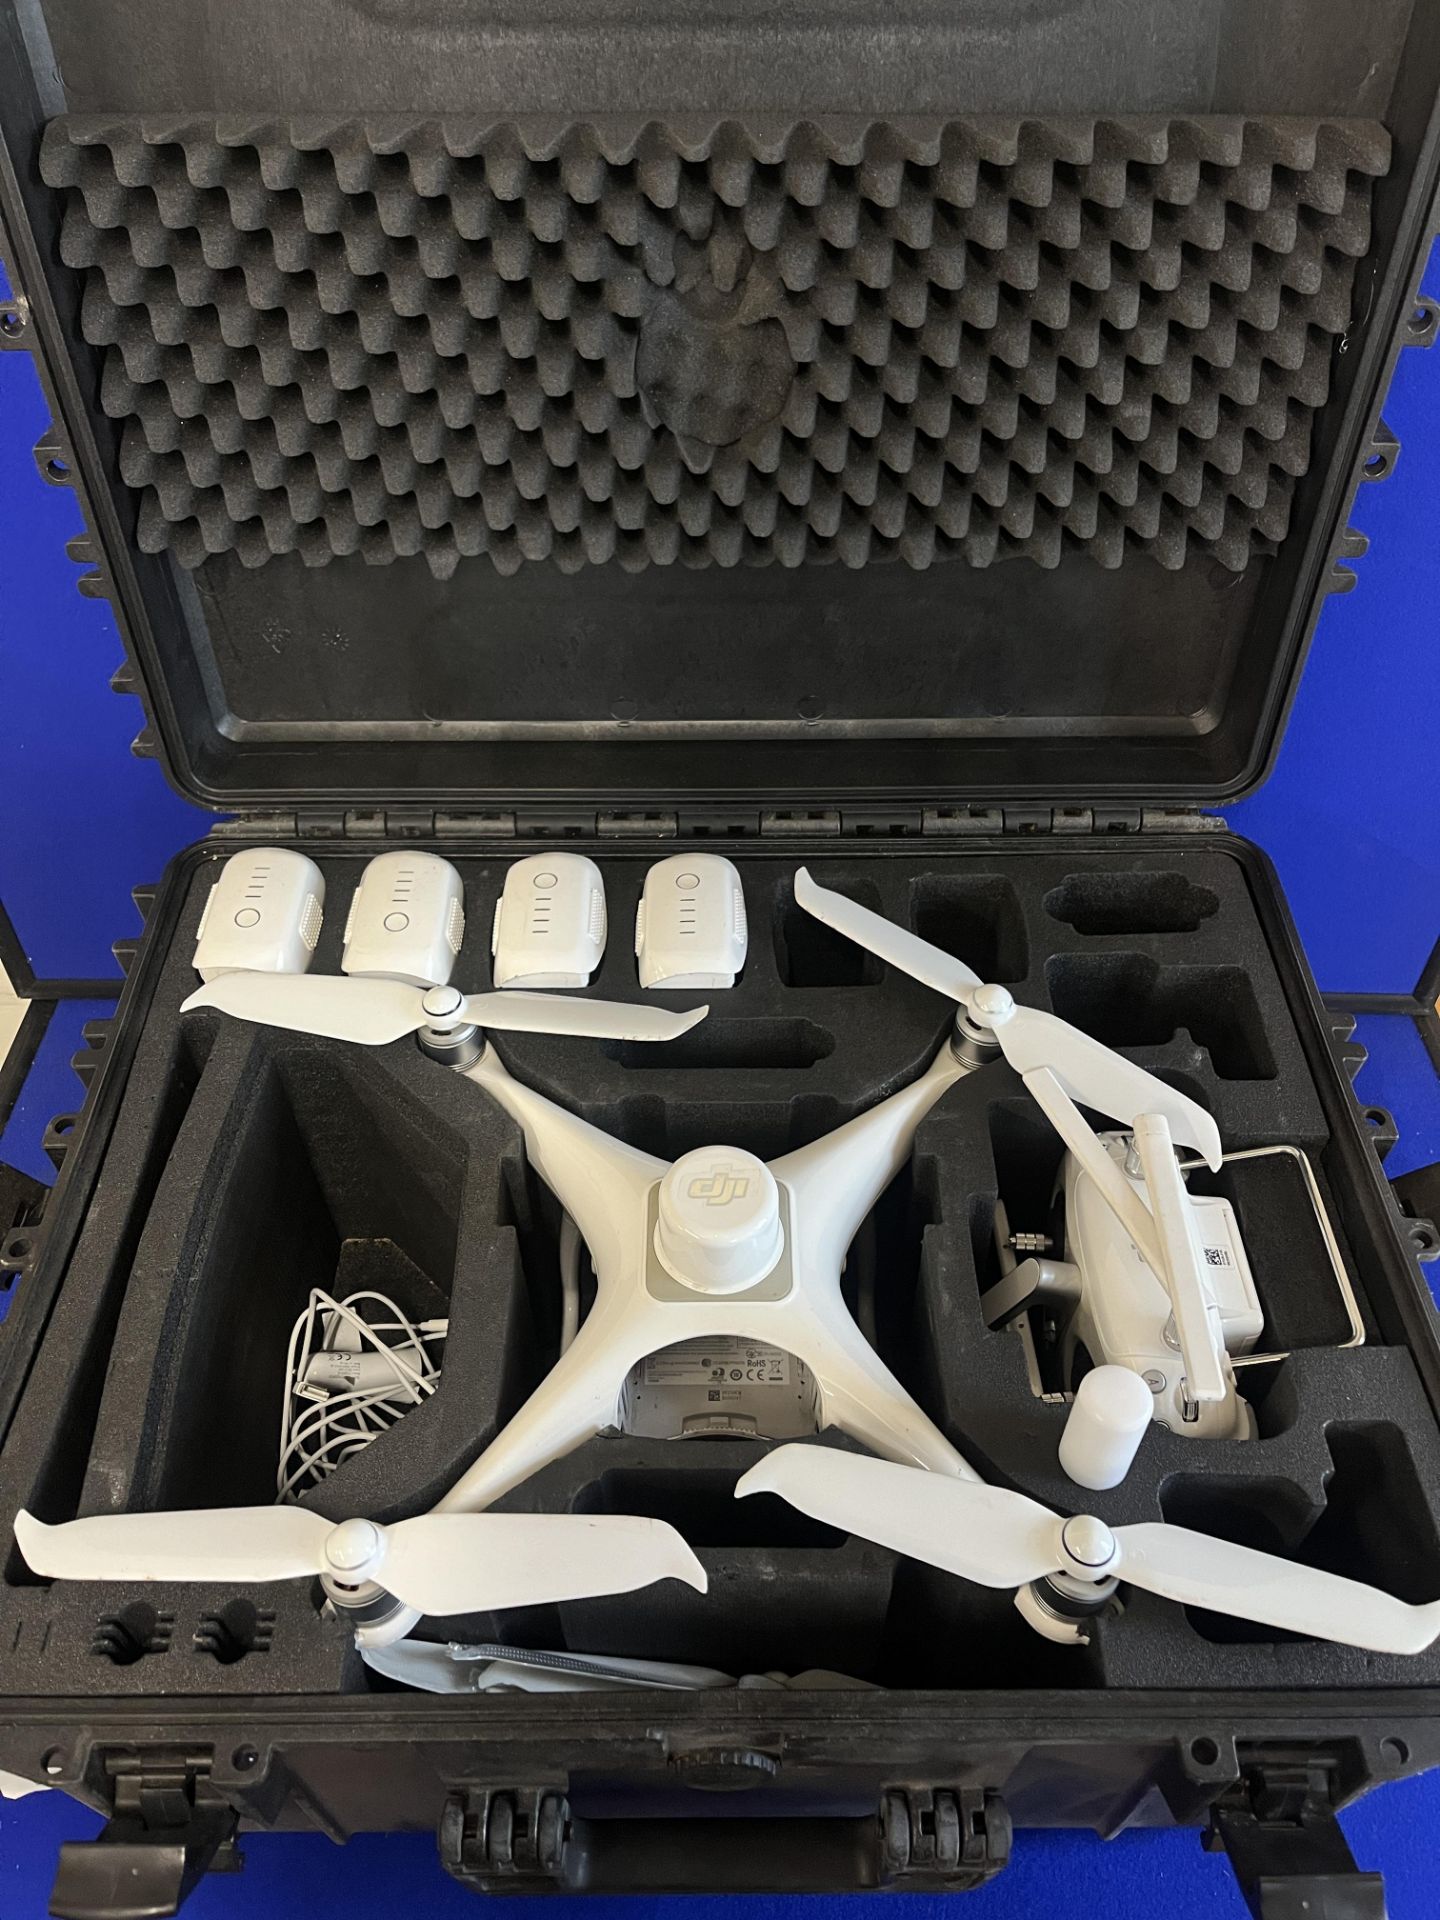 DJI Phantom 4 Drone with flight case - Image 2 of 8